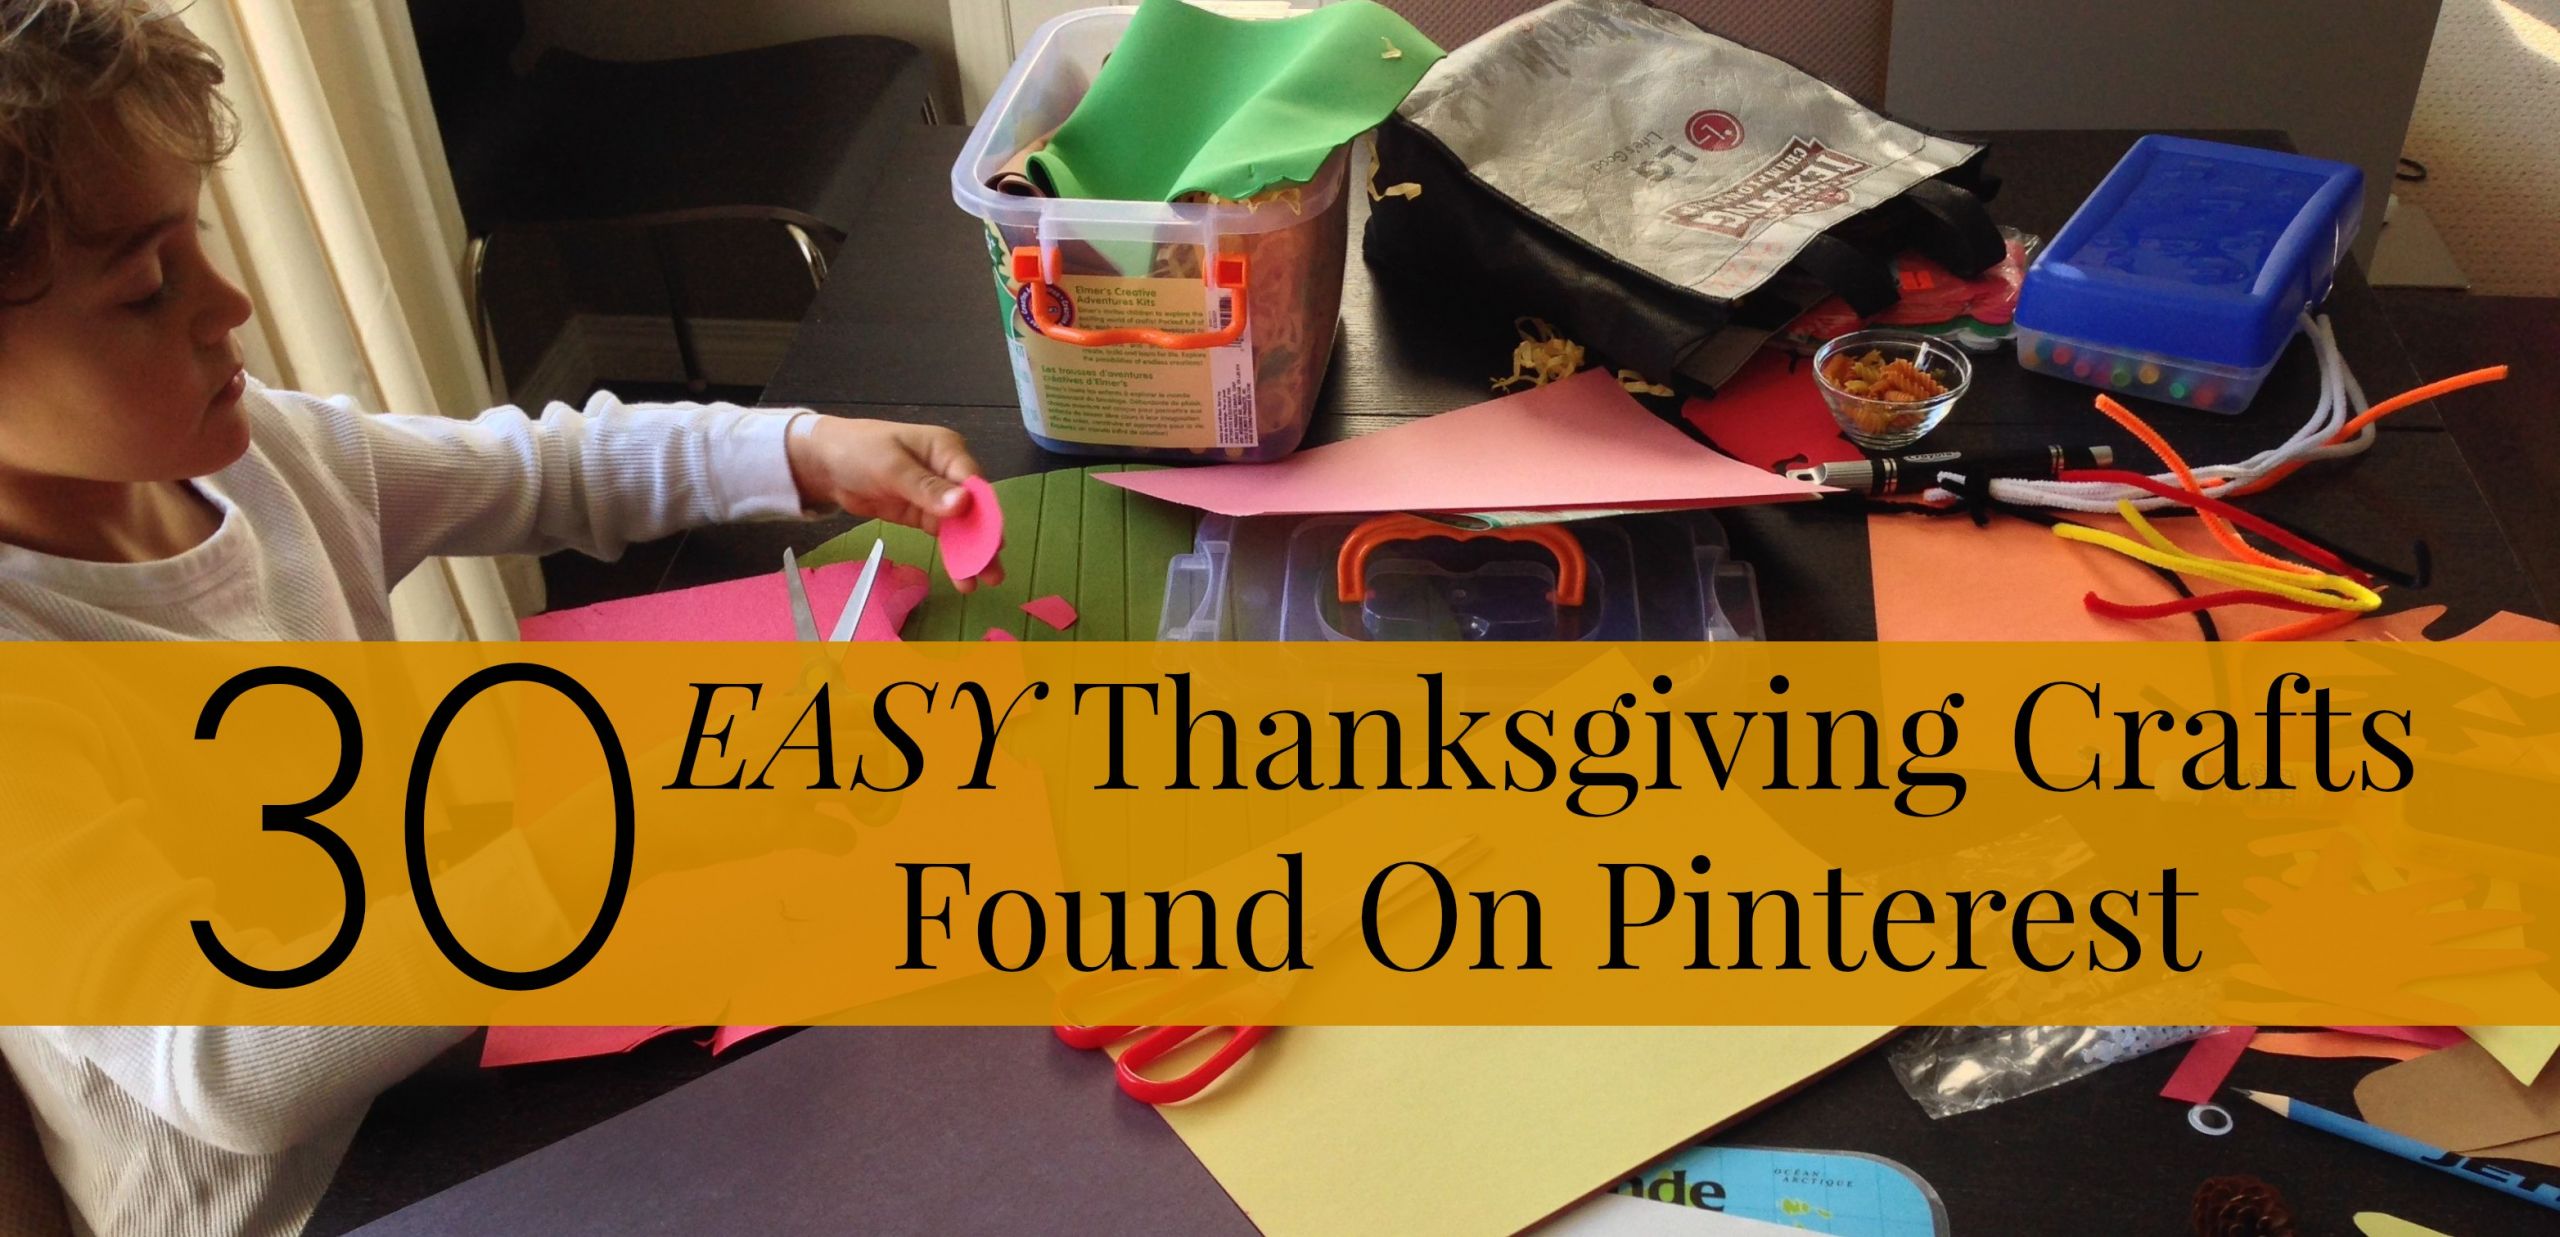 Pinterest Thanksgiving Crafts
 30 Easy Thanksgiving Crafts Pinterest